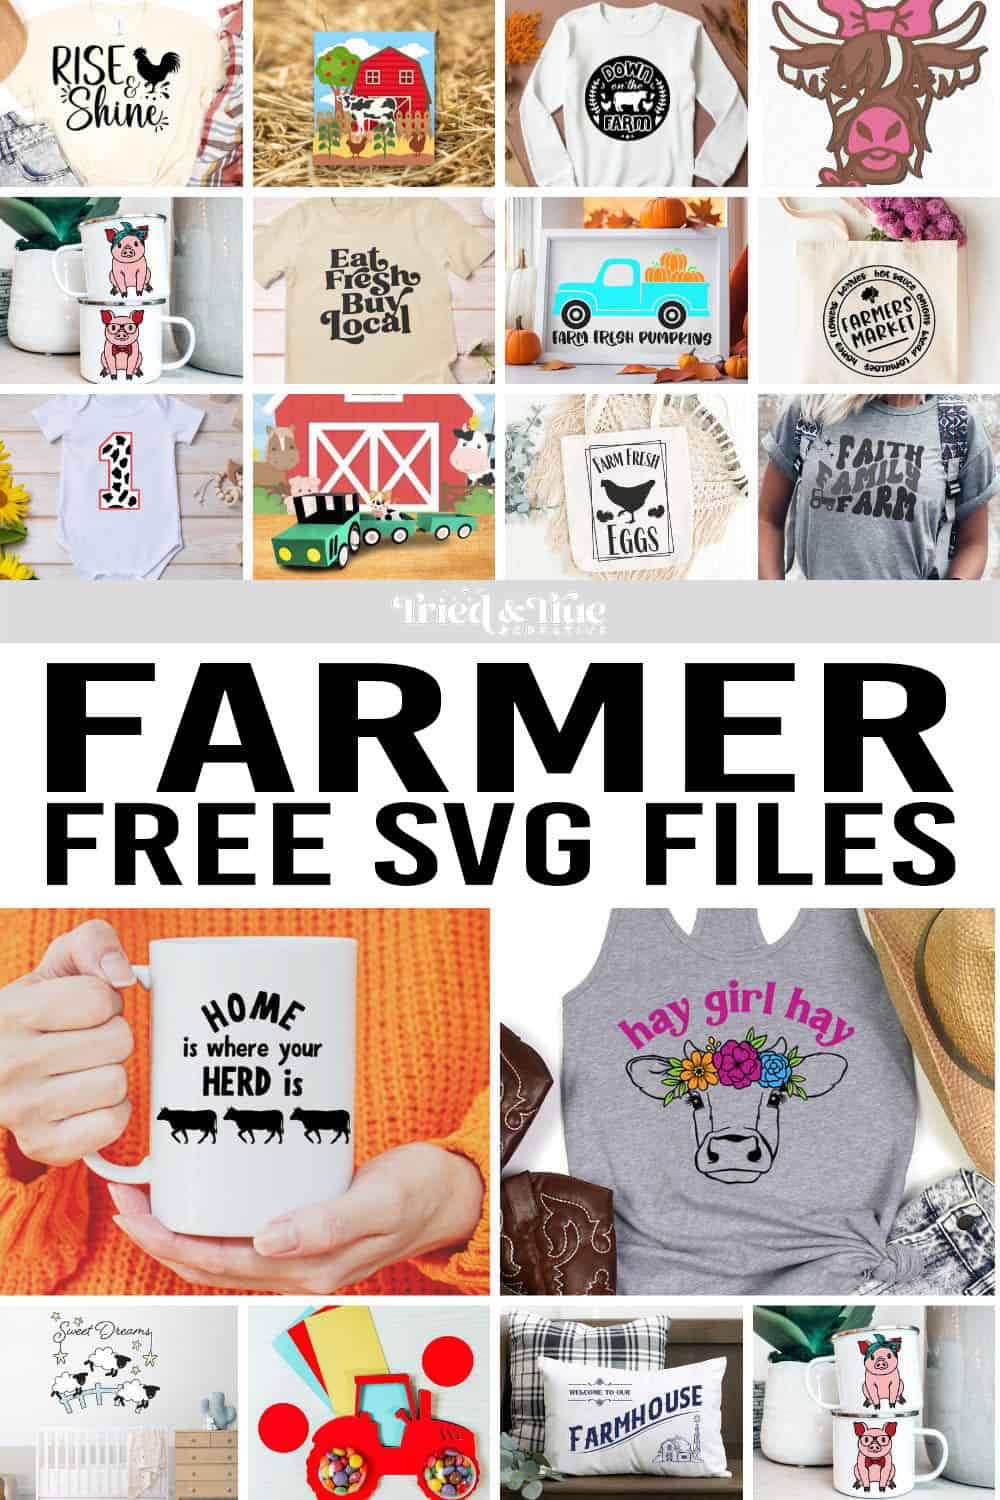 Farmer free svg files.